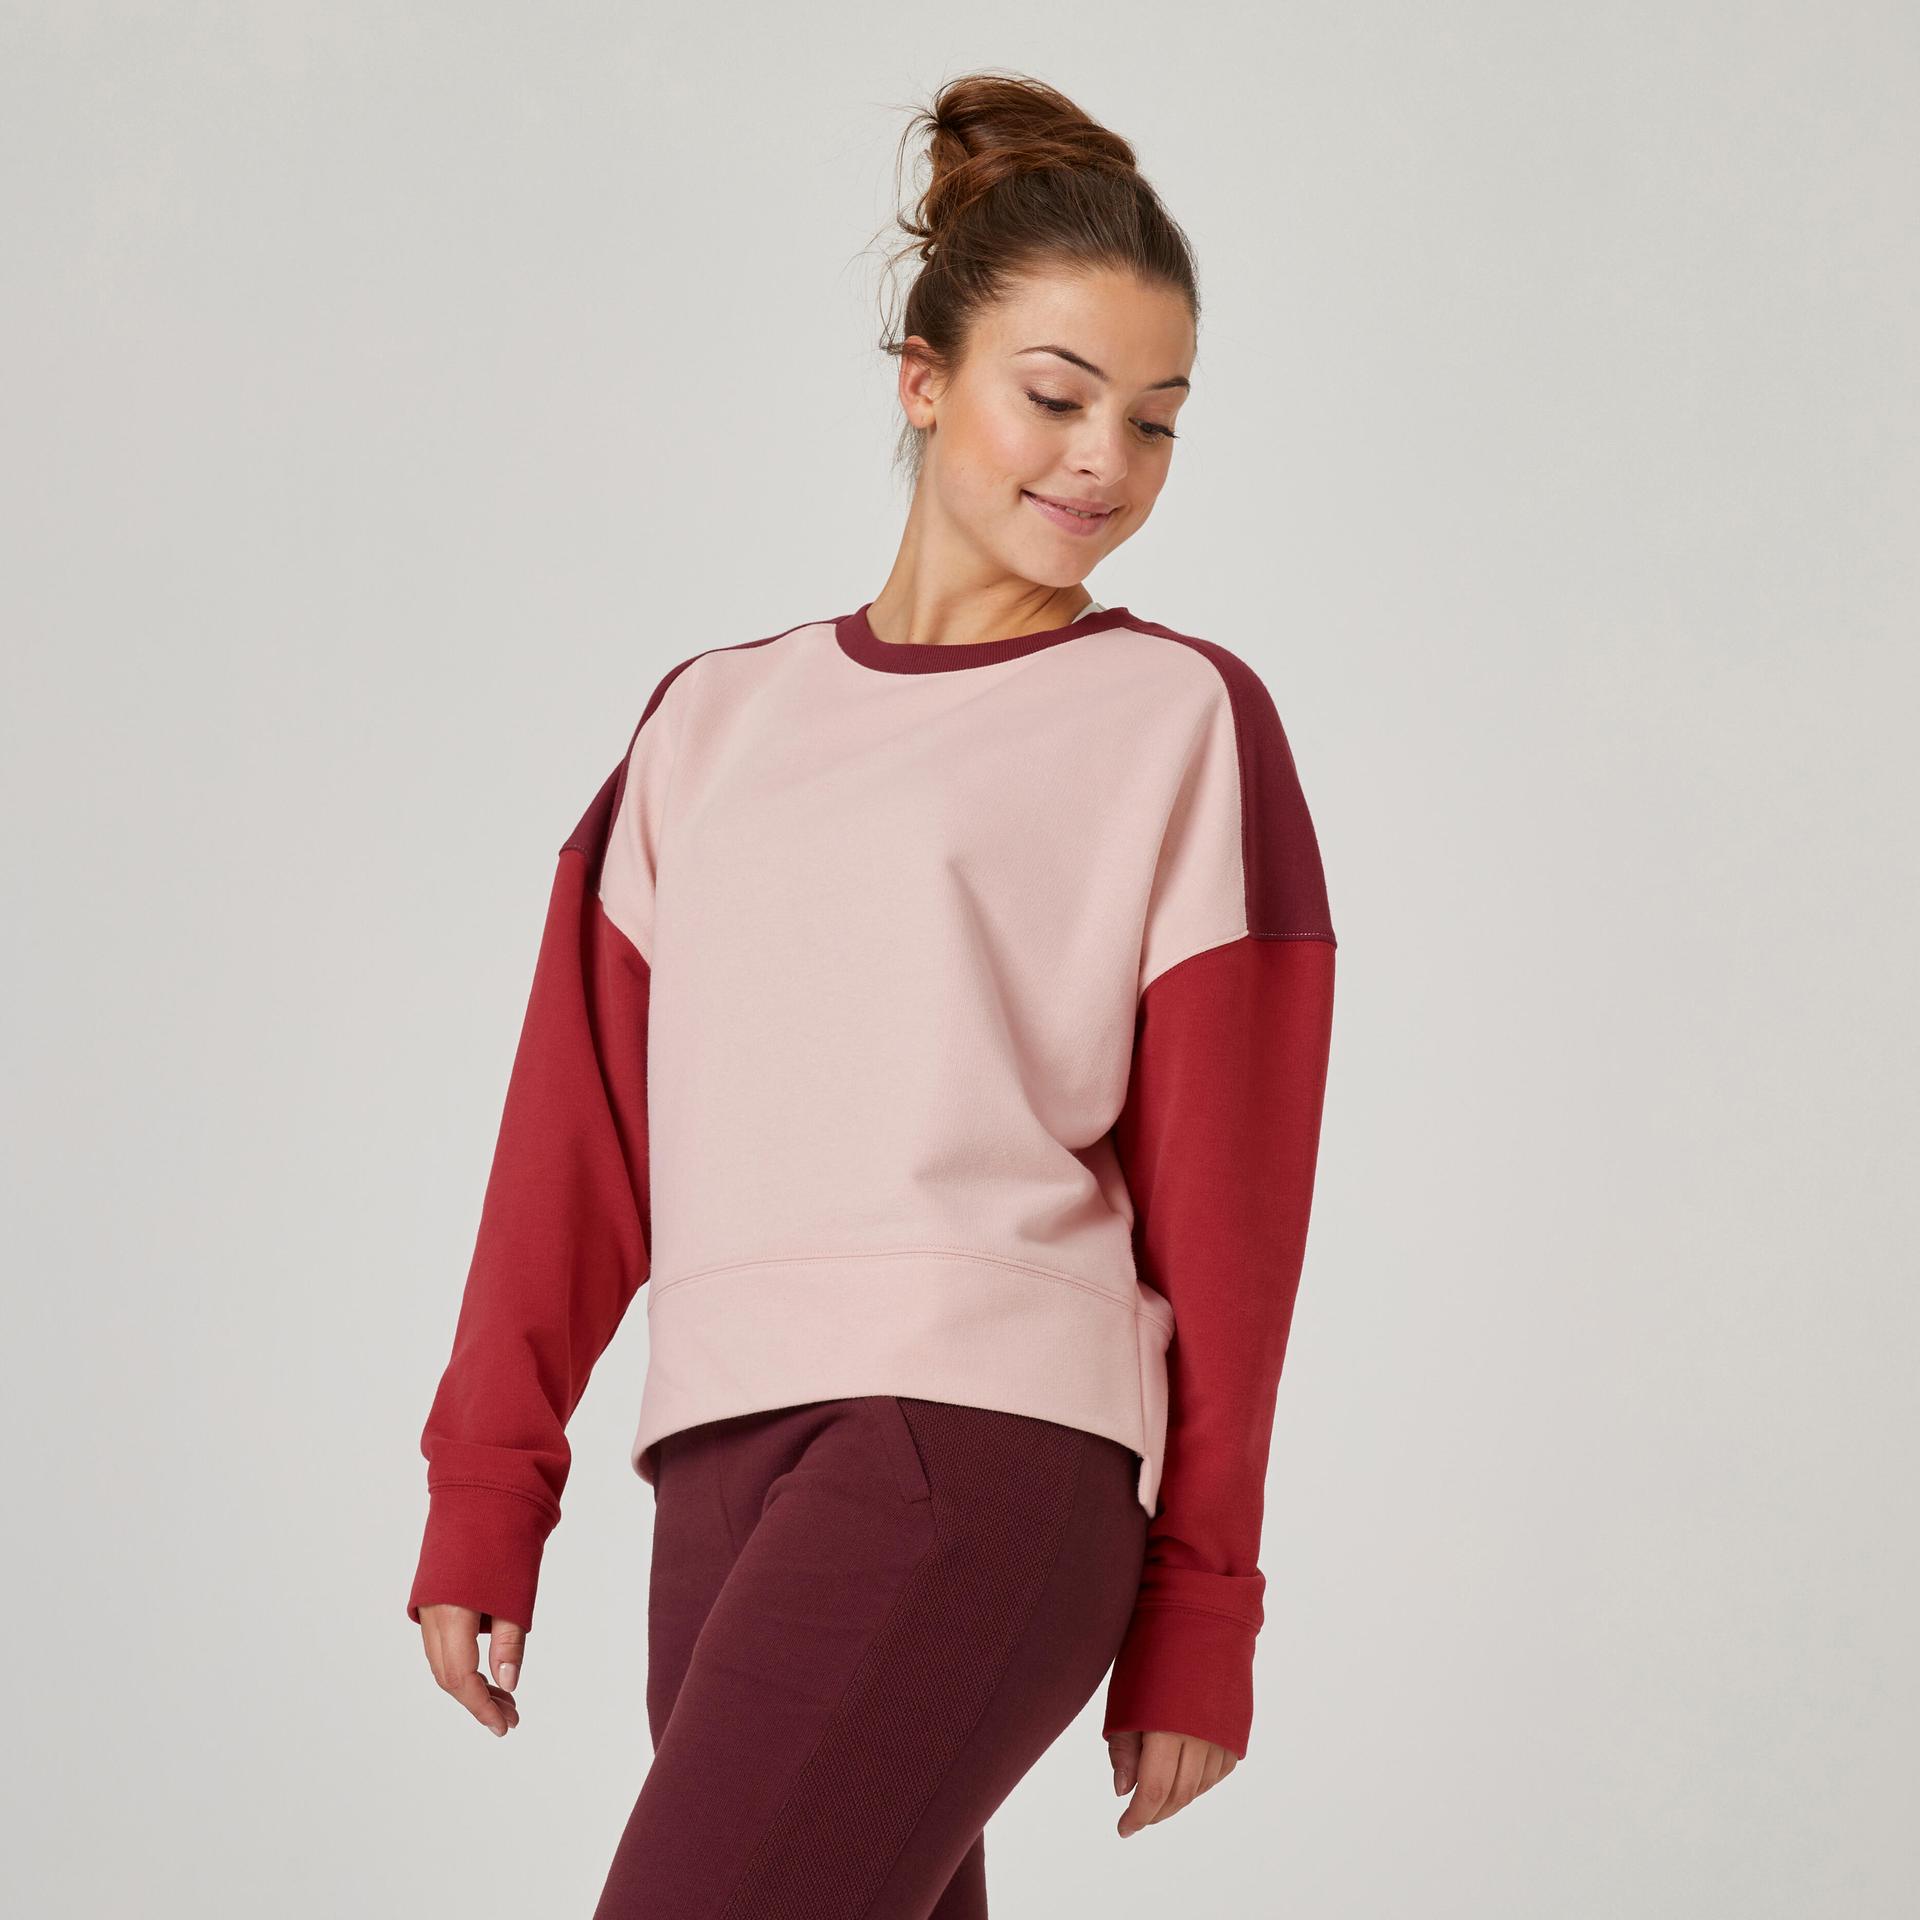 women's-loose-fitness-sweatshirt-120-cosmeto---pink/burgundy